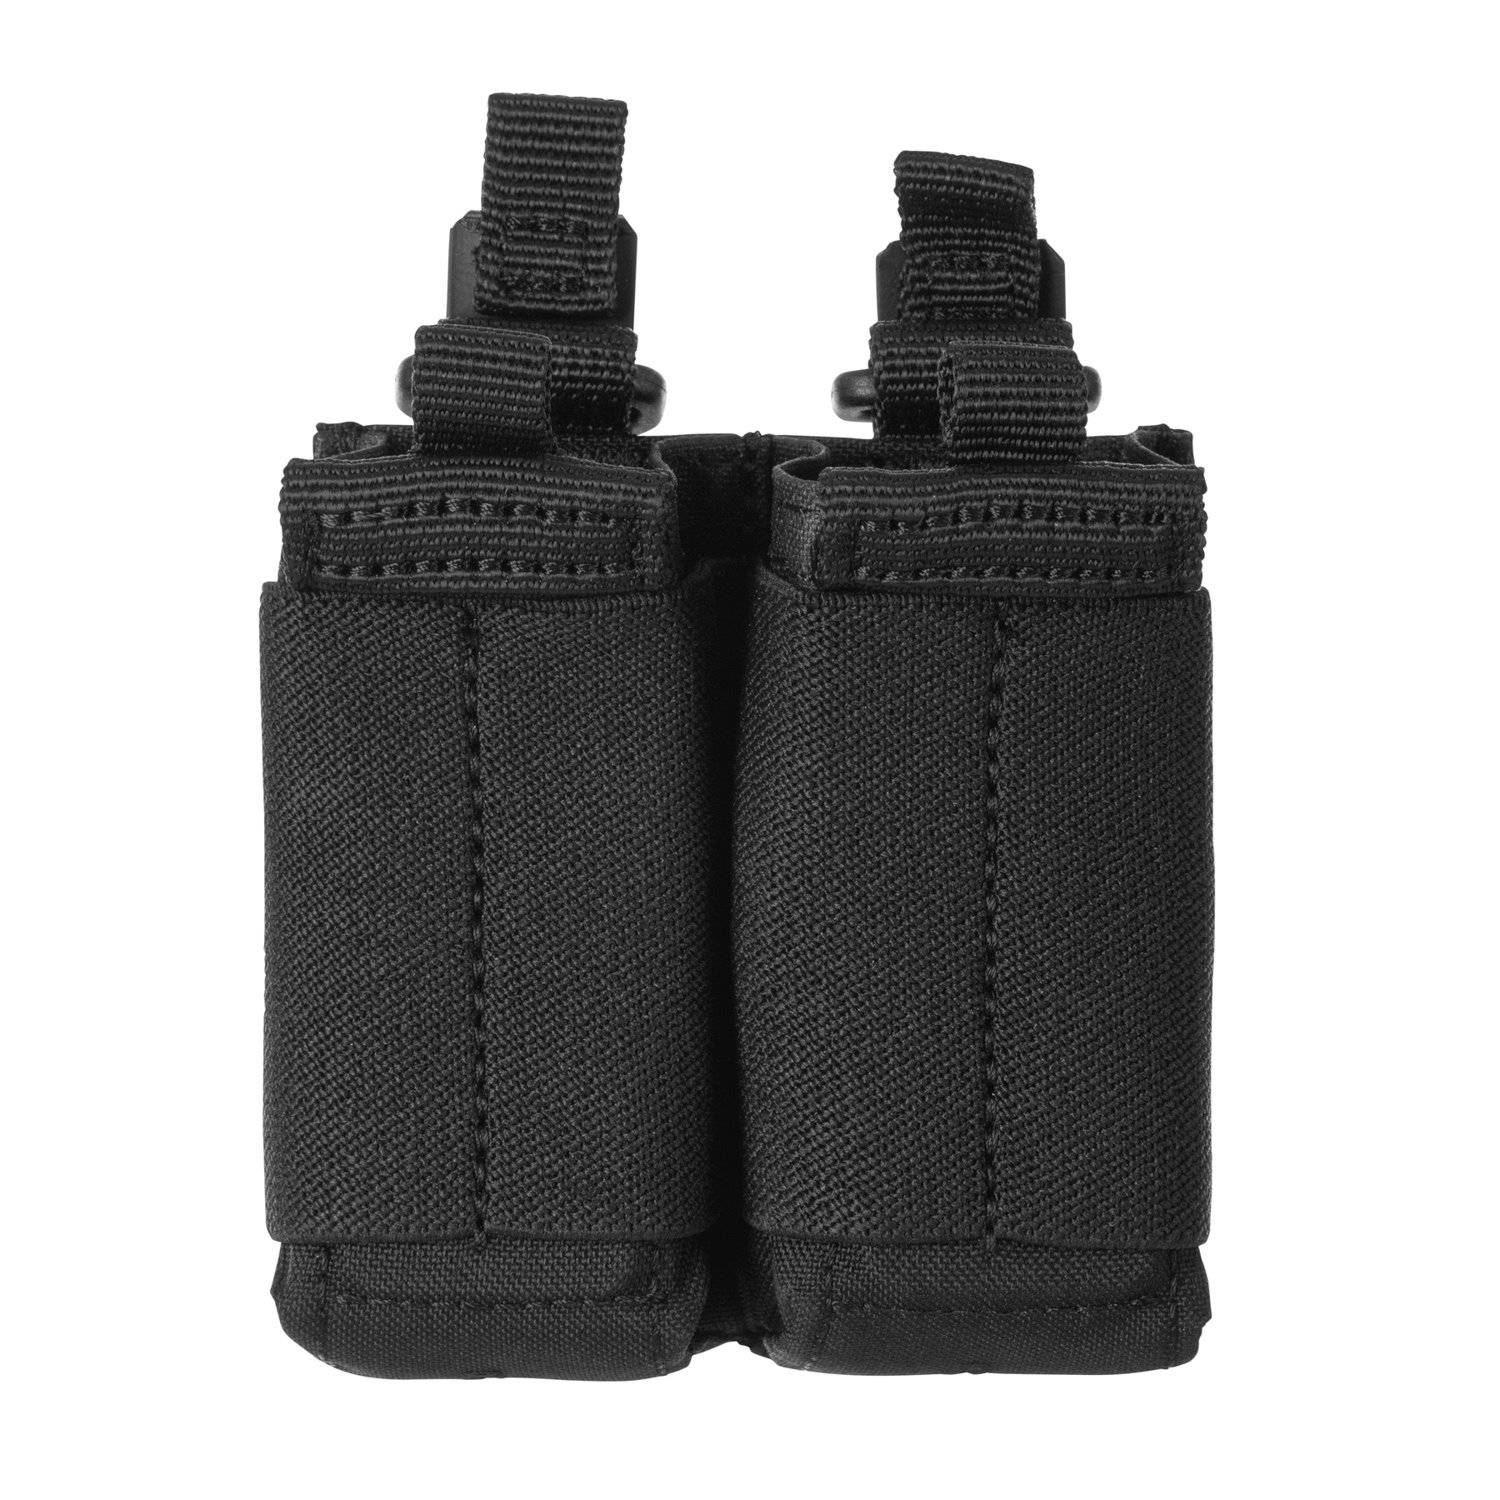 5.11 Tactical Flex Double Pistol Mag Pouch 2.0 | Galls